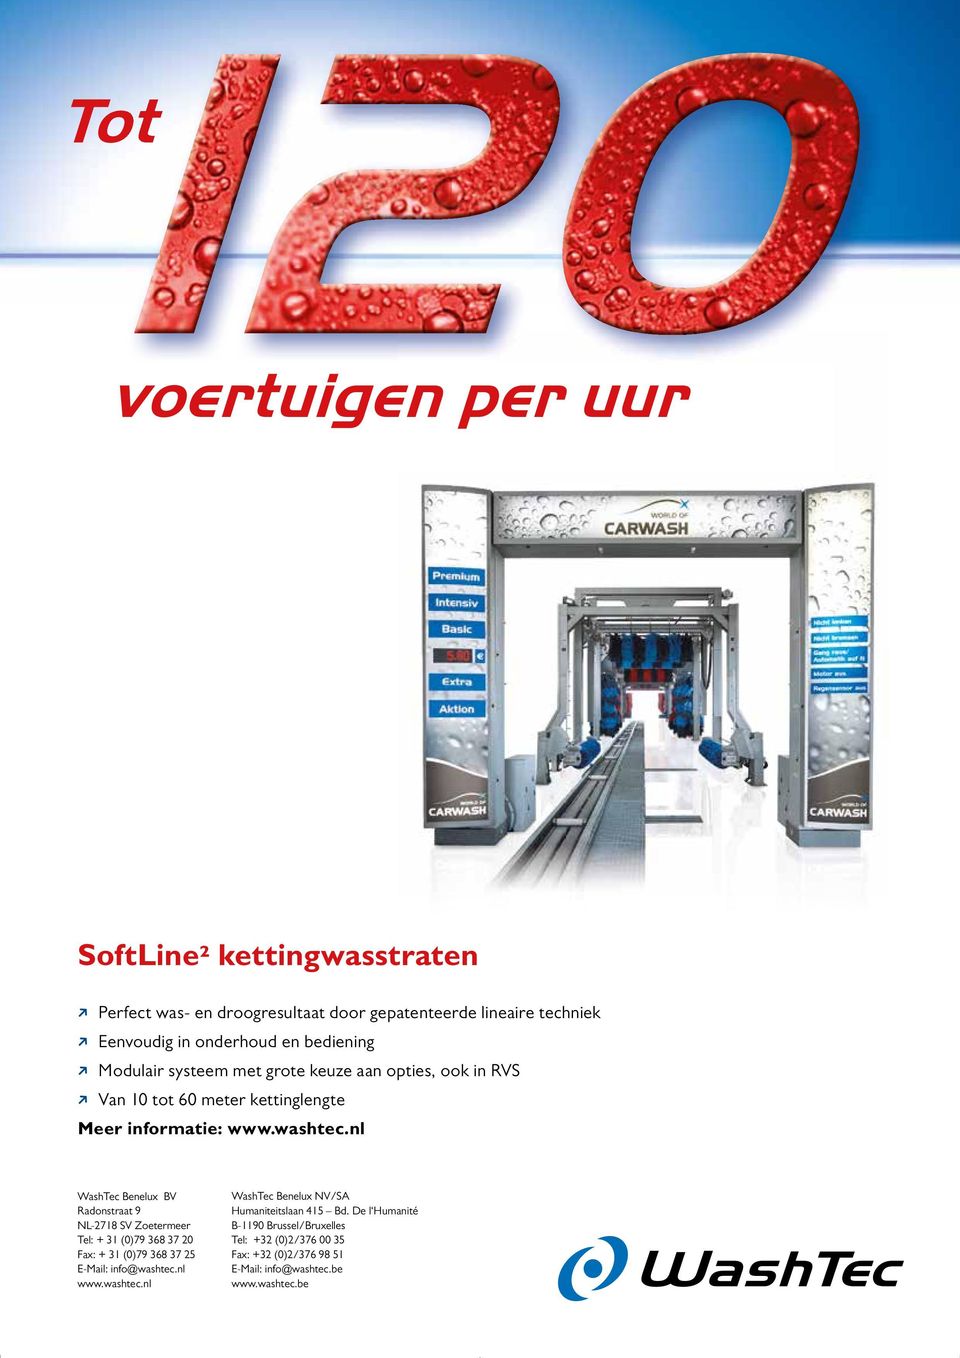 nl WashTec Benelux BV Radonstraat 9 NL-2718 SV Zoetermeer Tel: + 31 (0)79 368 37 20 Fax: + 31 (0)79 368 37 25 E-Mail: info@washtec.